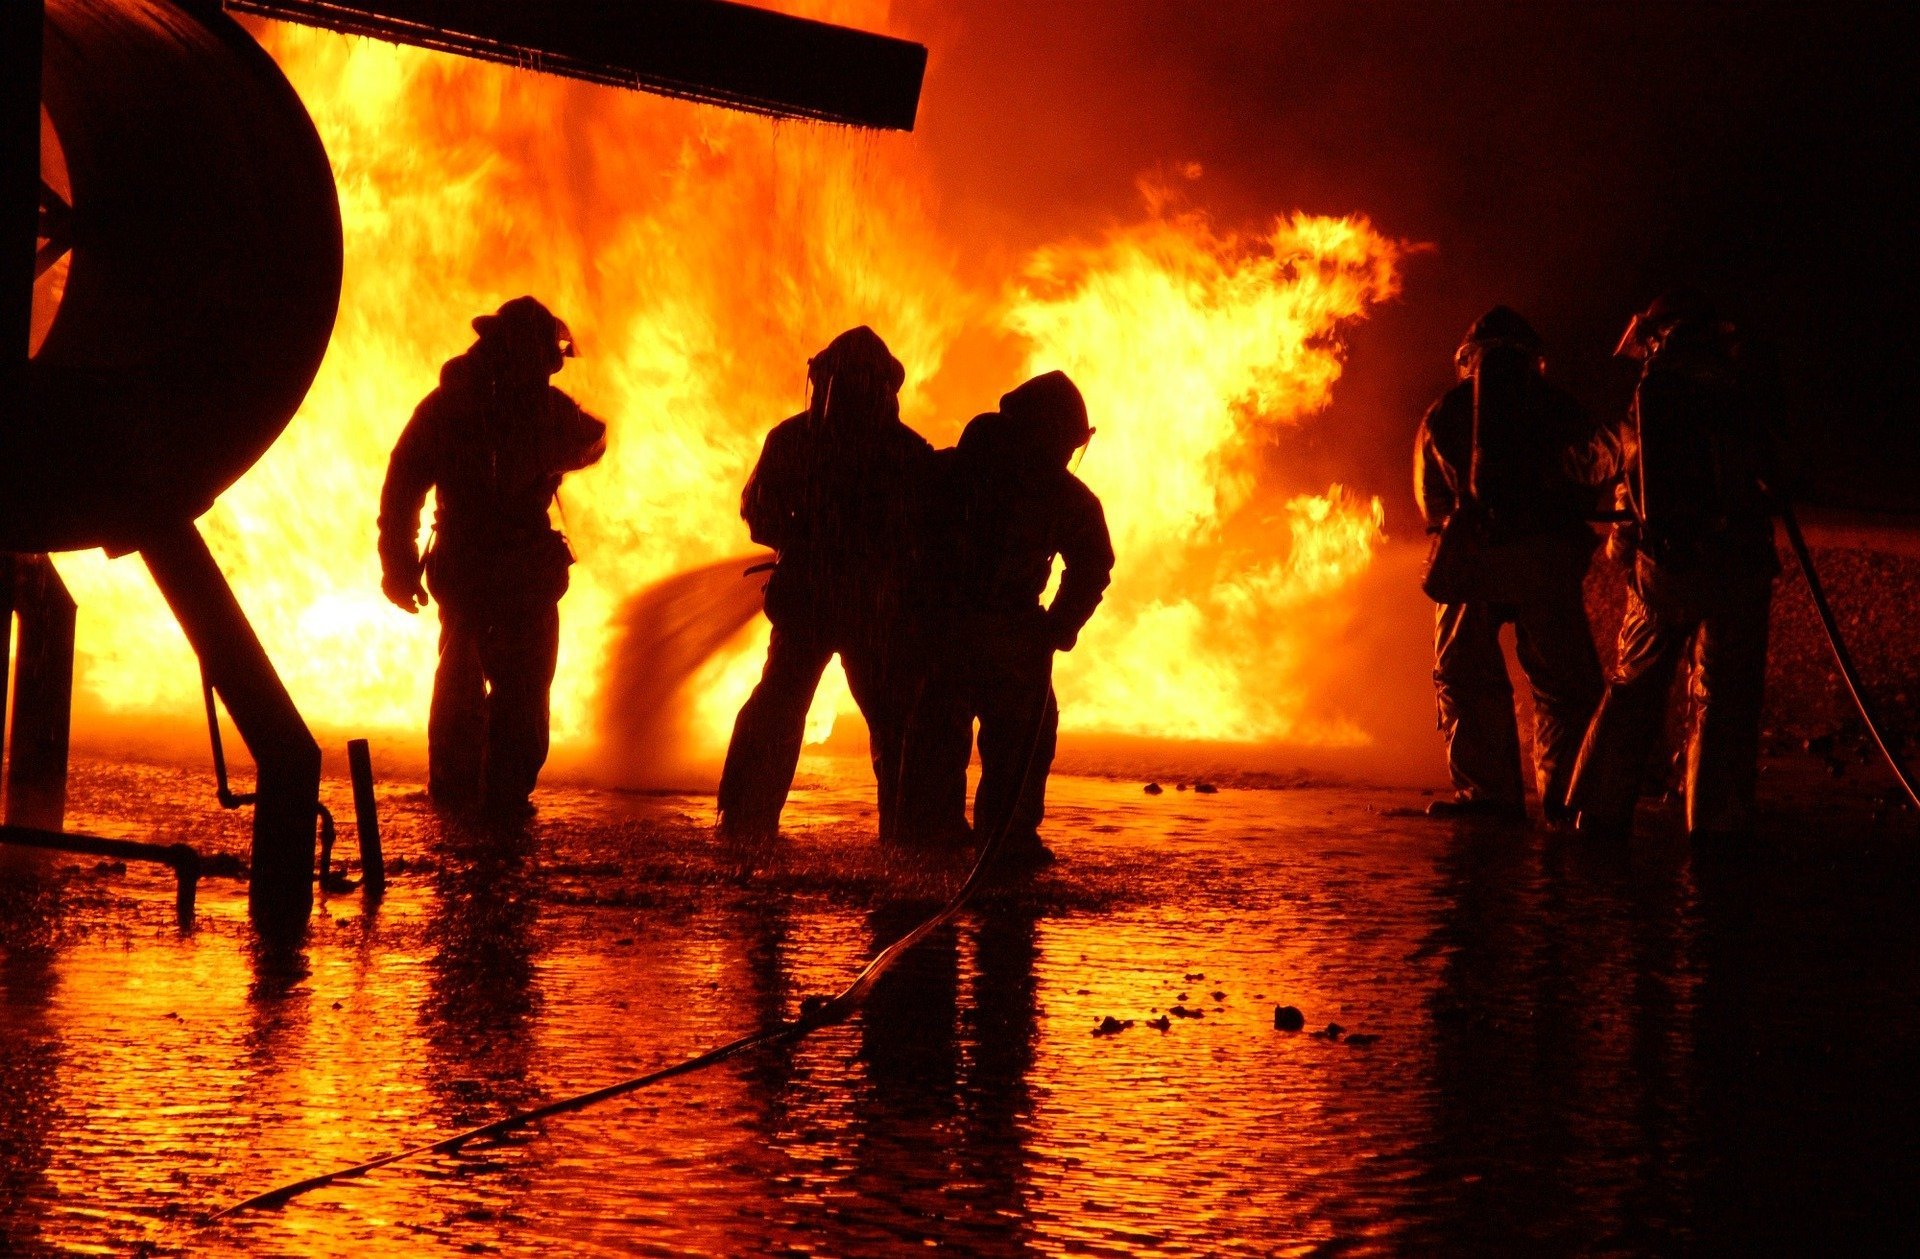 Firemen fighting a blaze. | Source: Pixabay